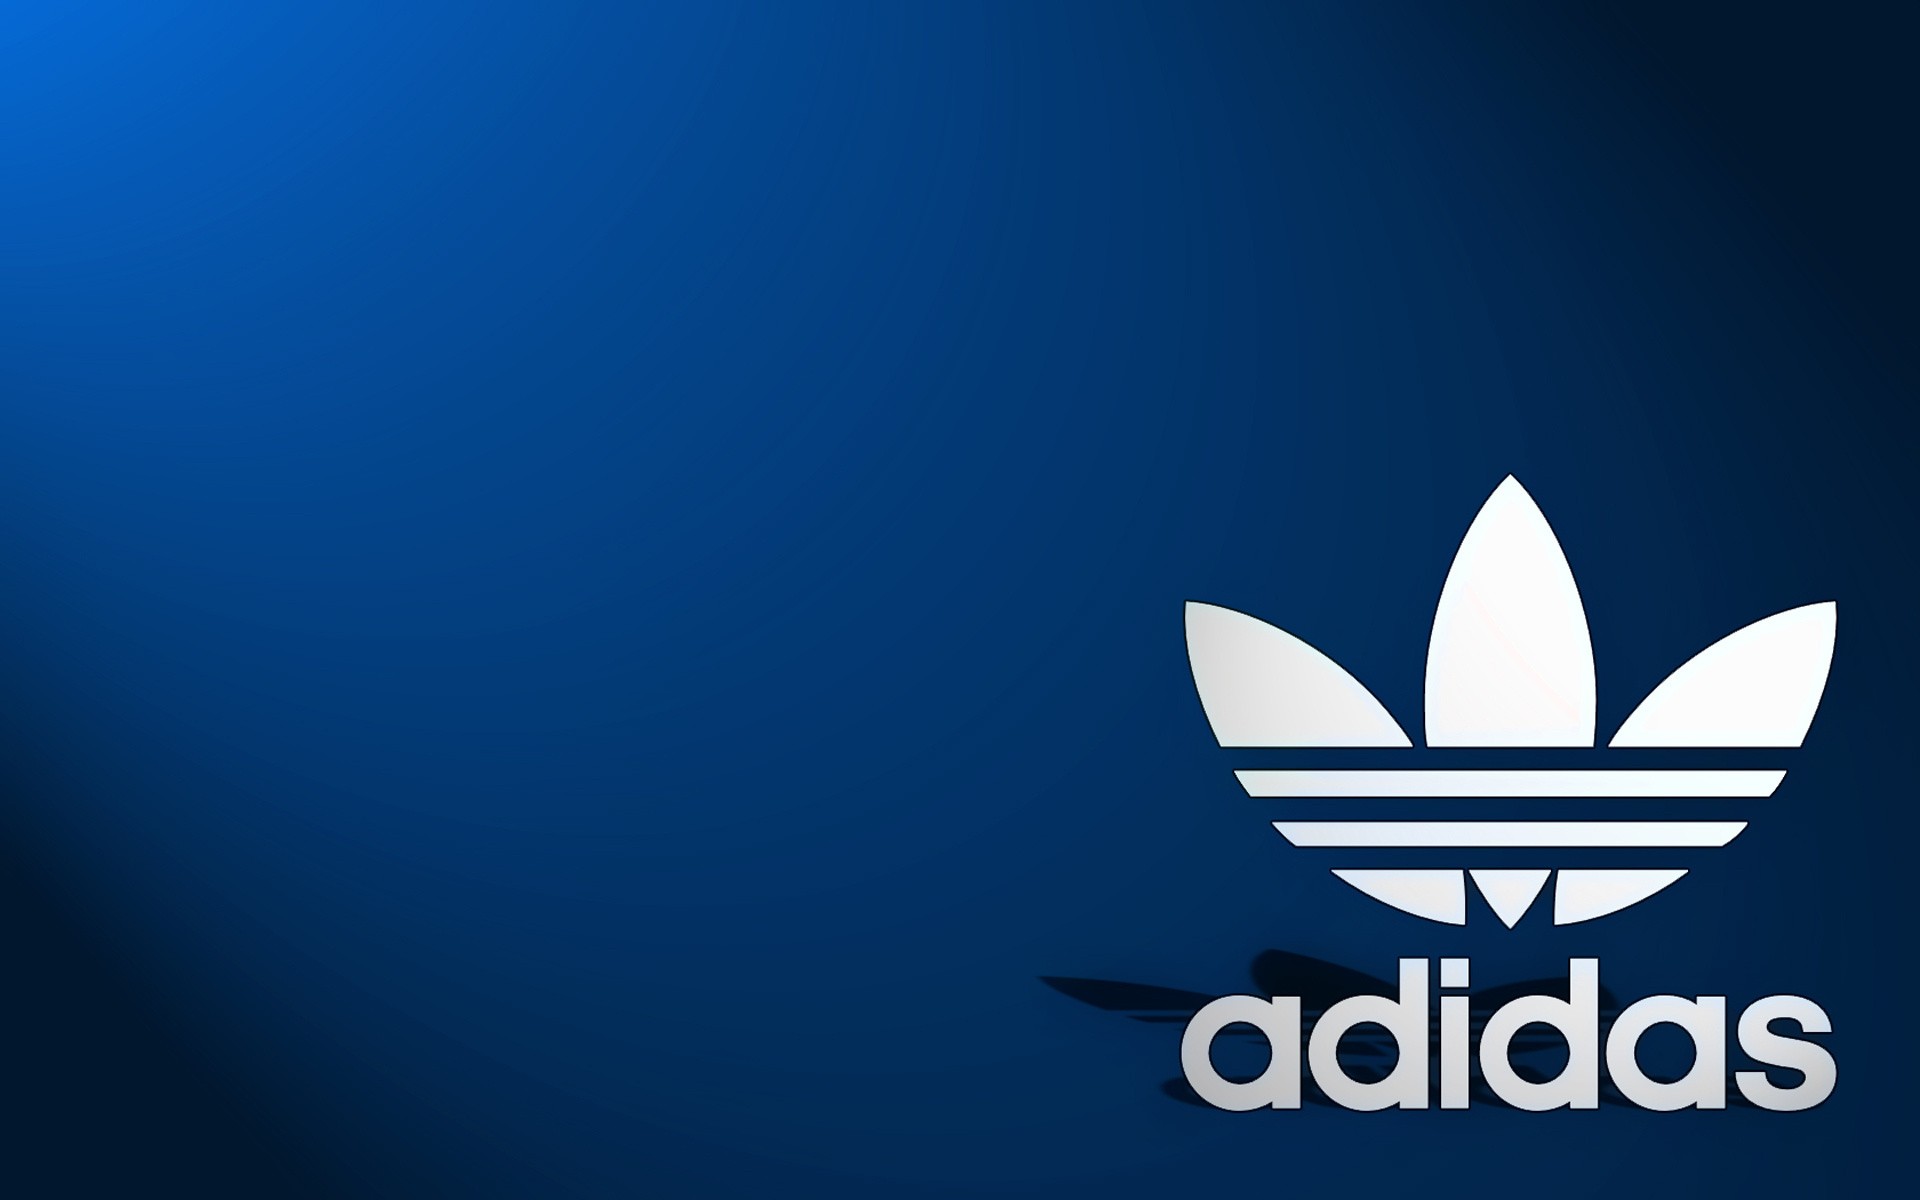 Sports Adidas Wallpaper Brands Logos Blue